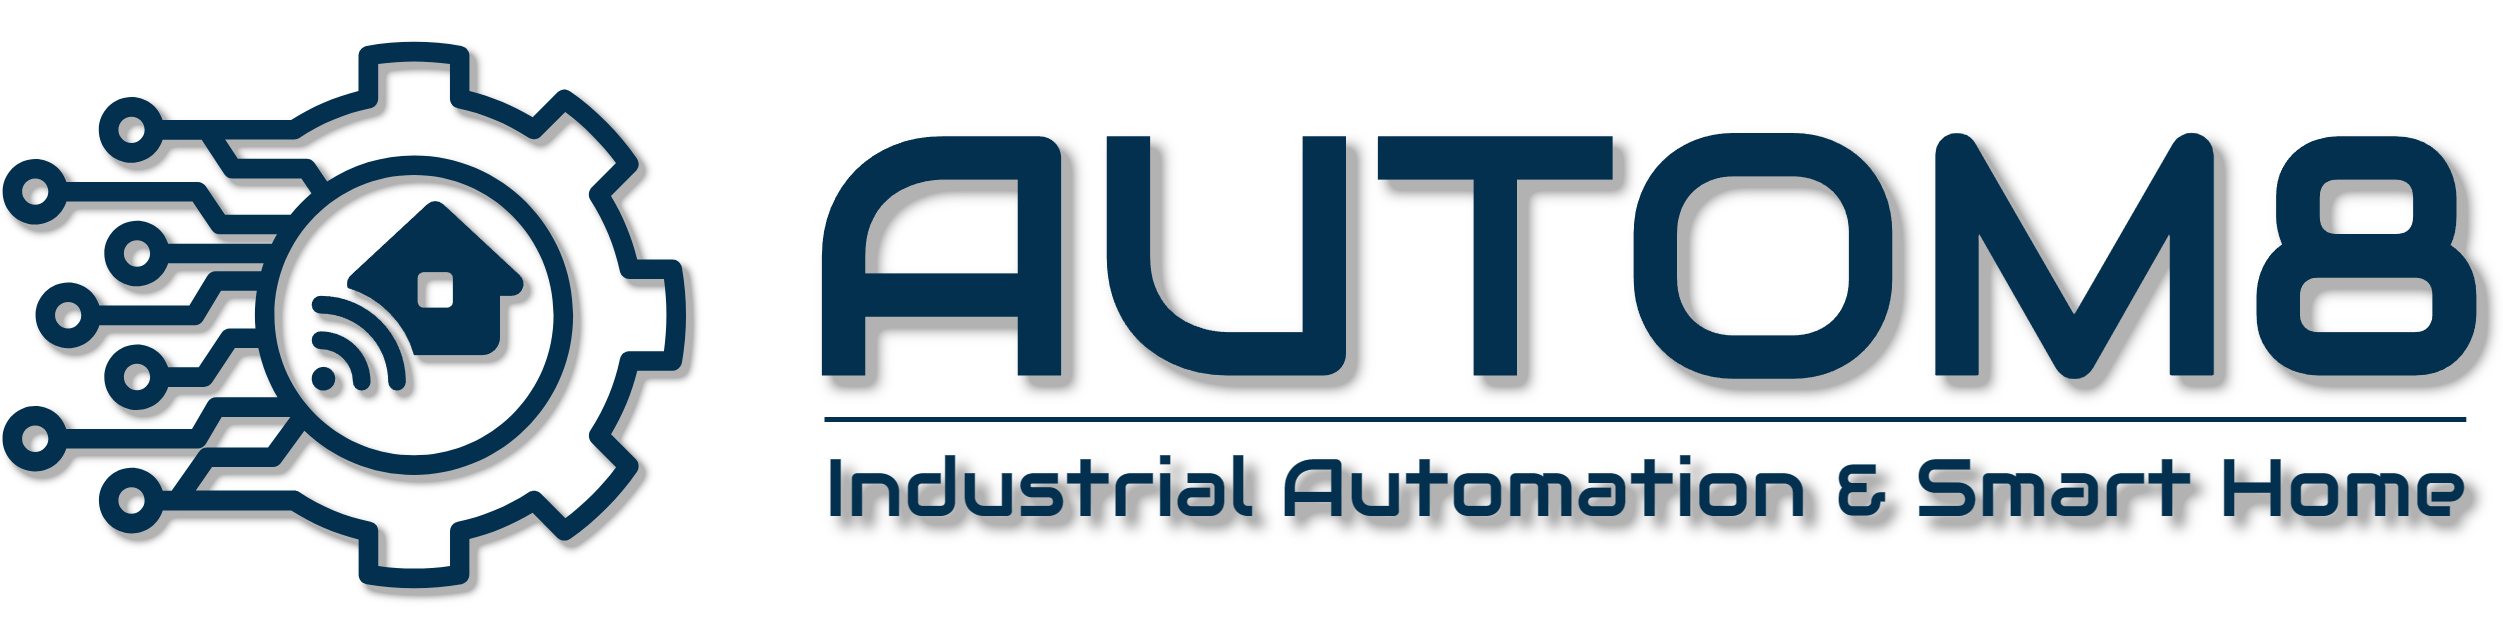 Autom8 GmbH Logo Image